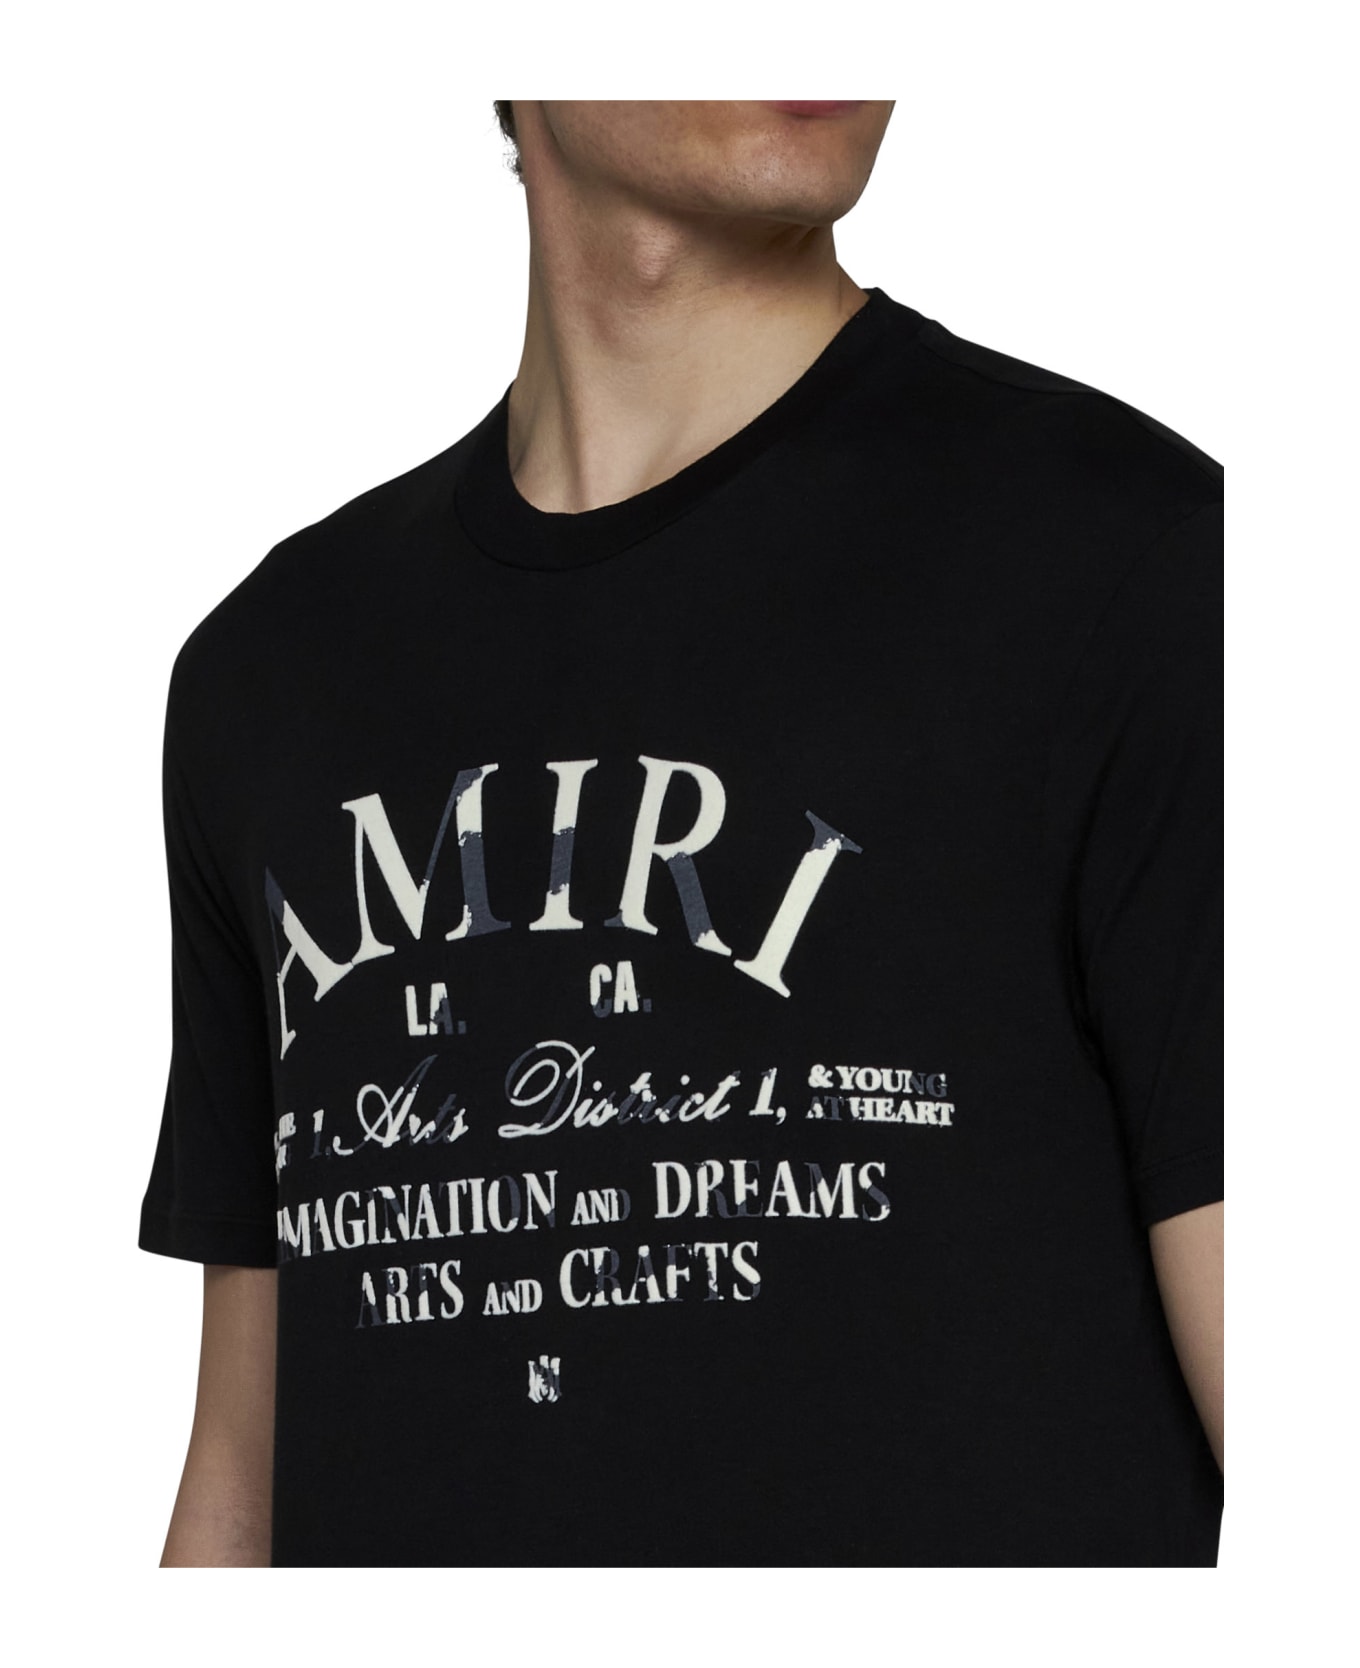 AMIRI T-Shirt - Black シャツ